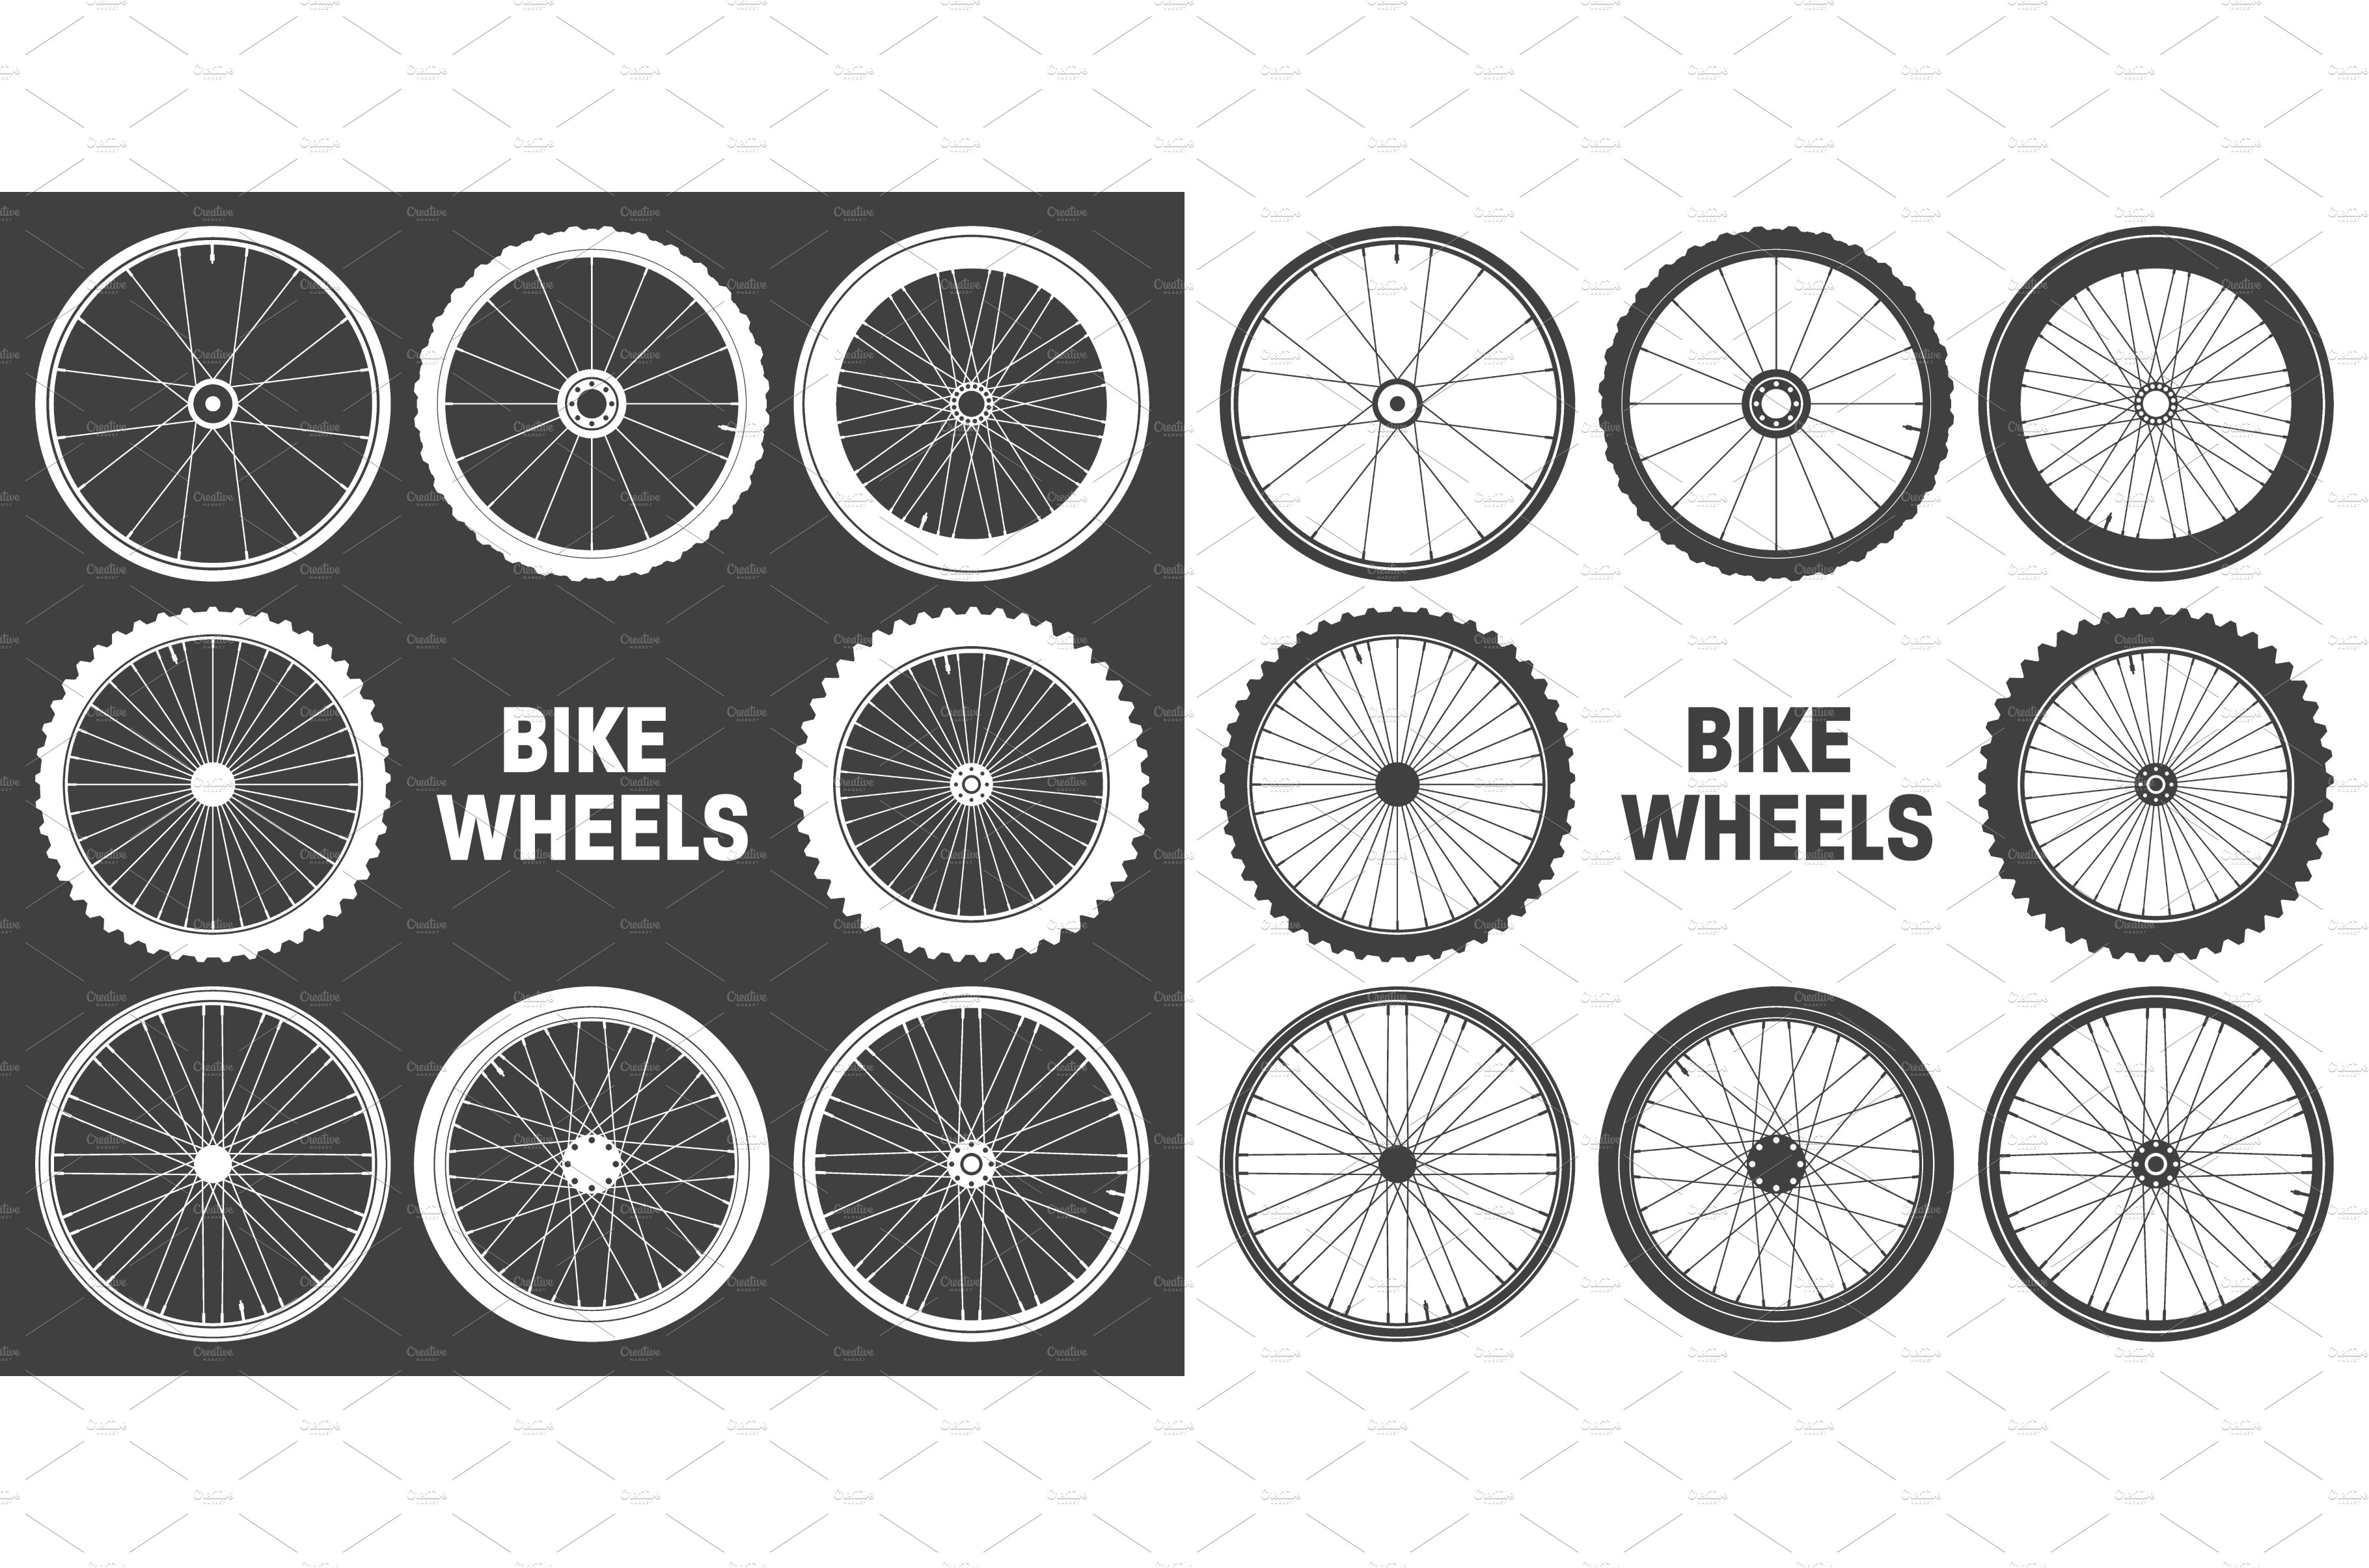 White bicycle wheel symbols cover image.